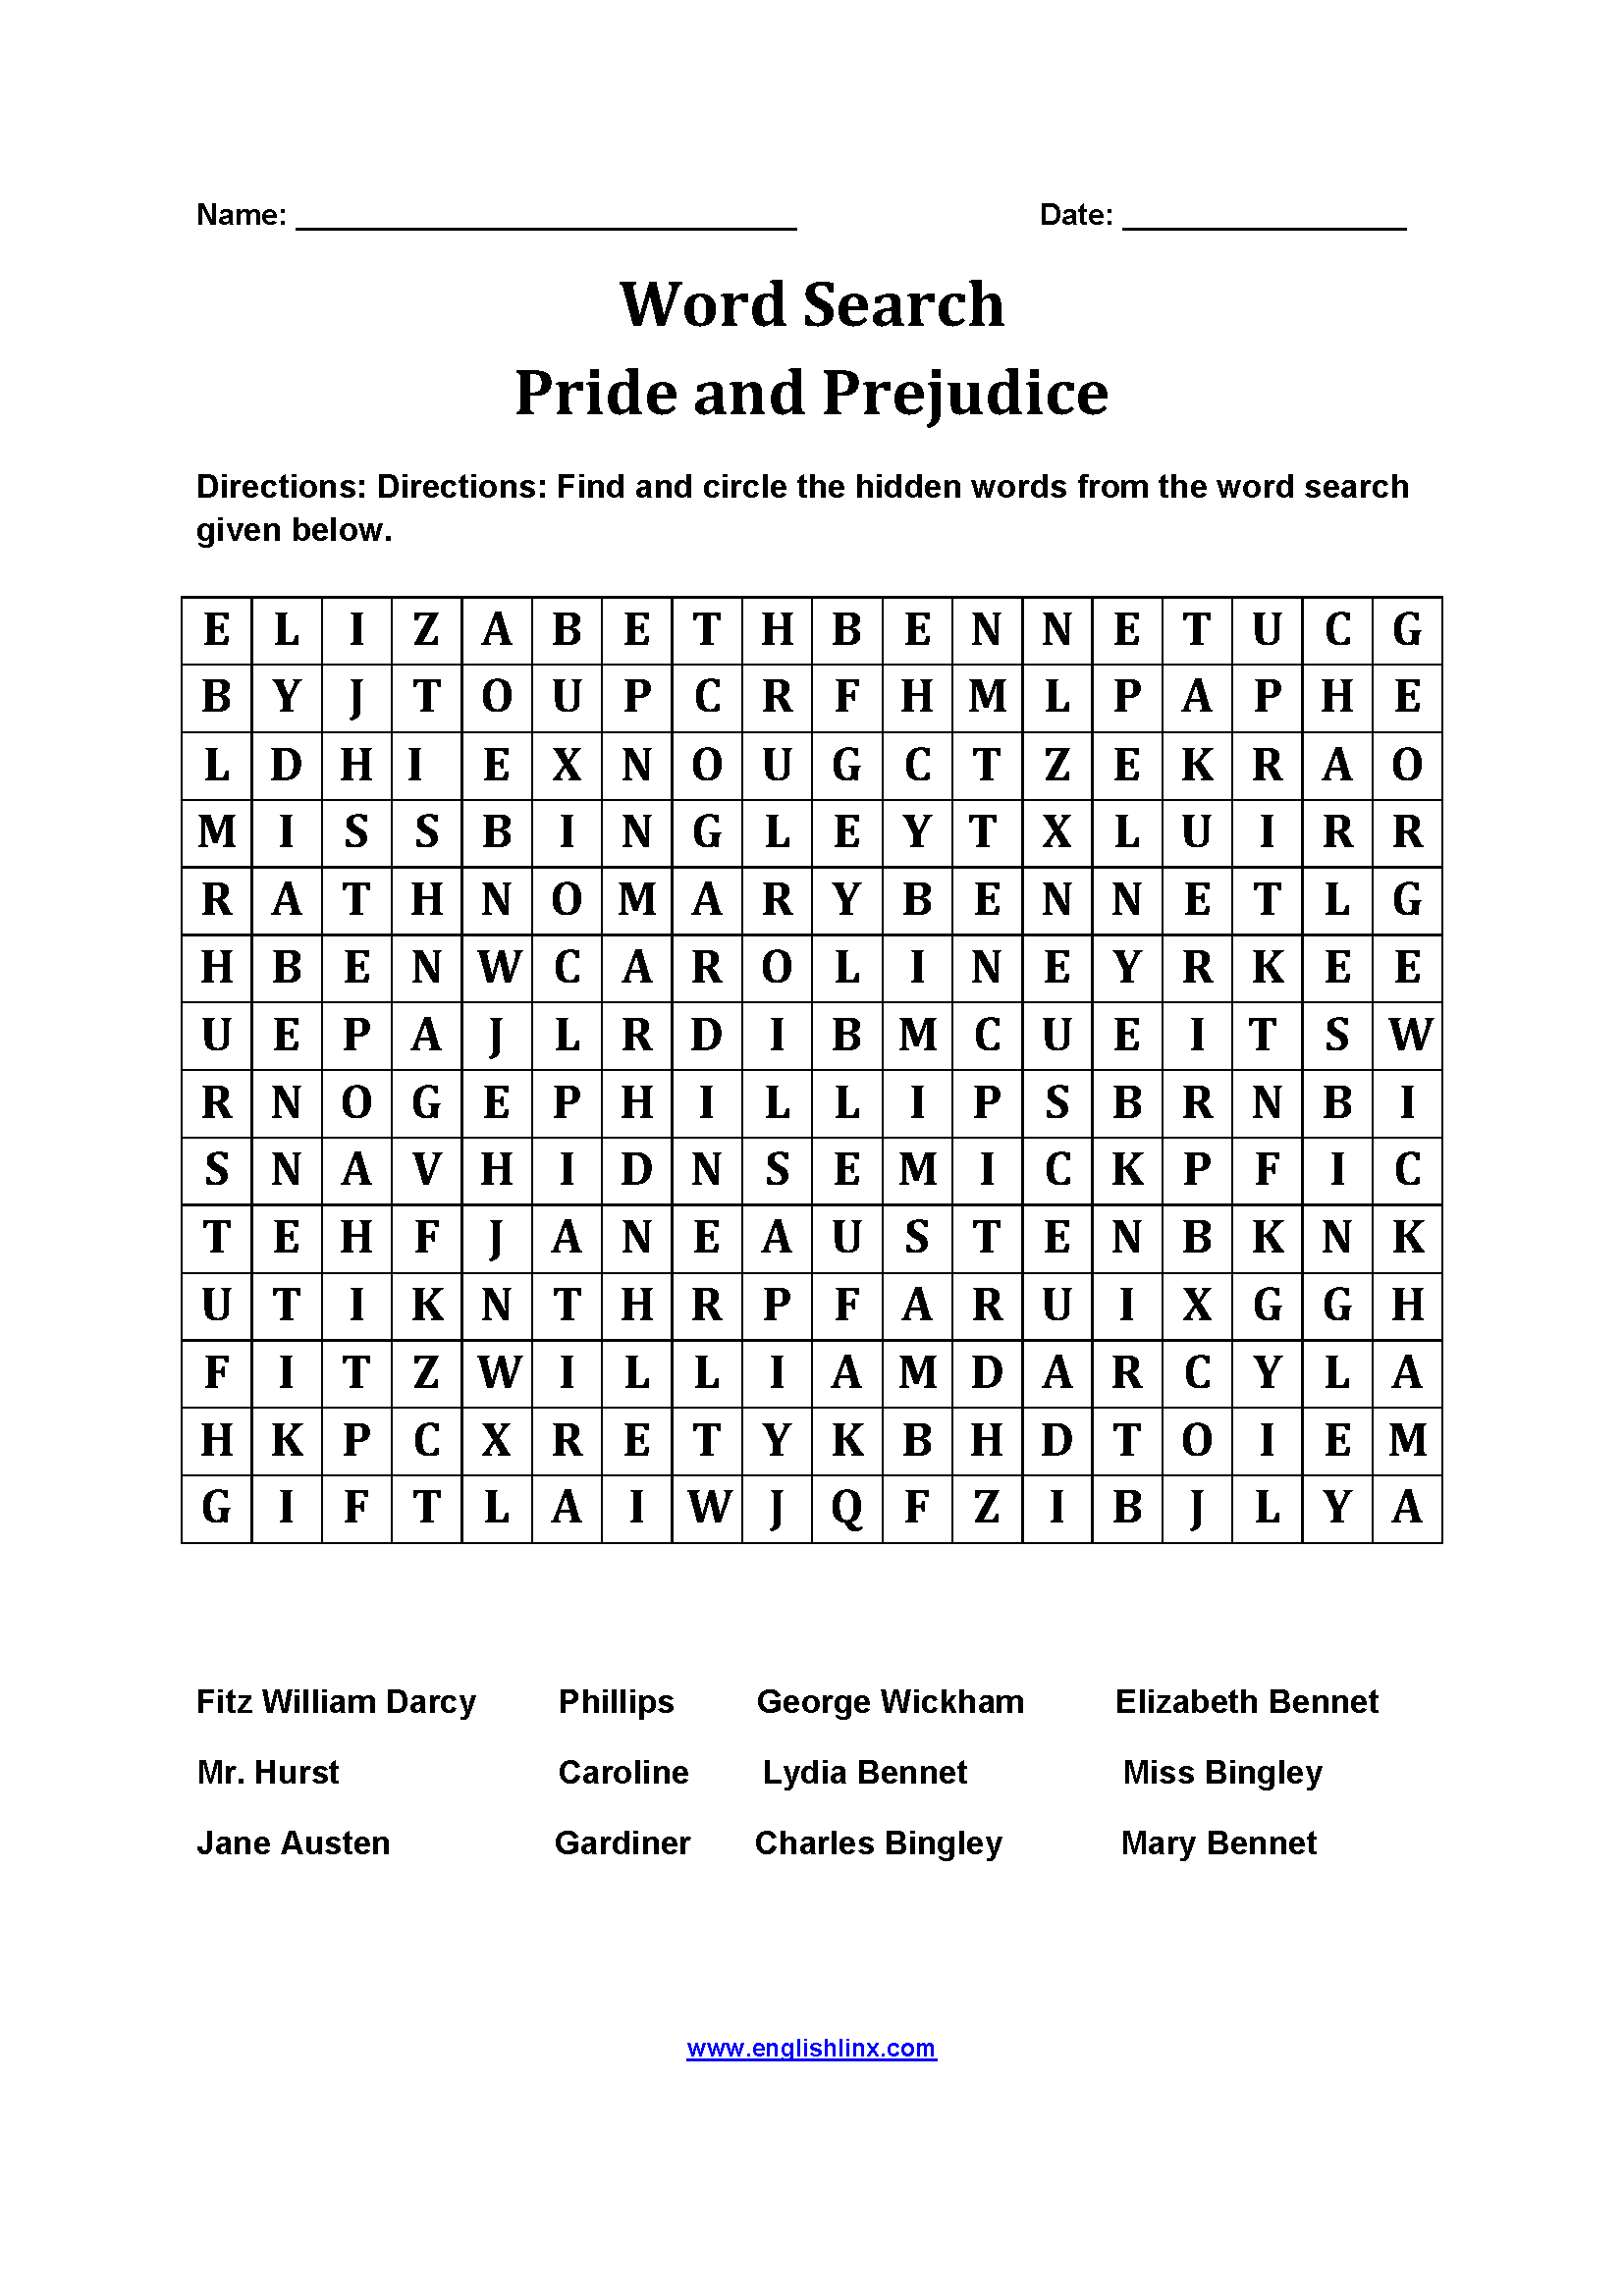 Pride and Prejudice Word Search Worksheets